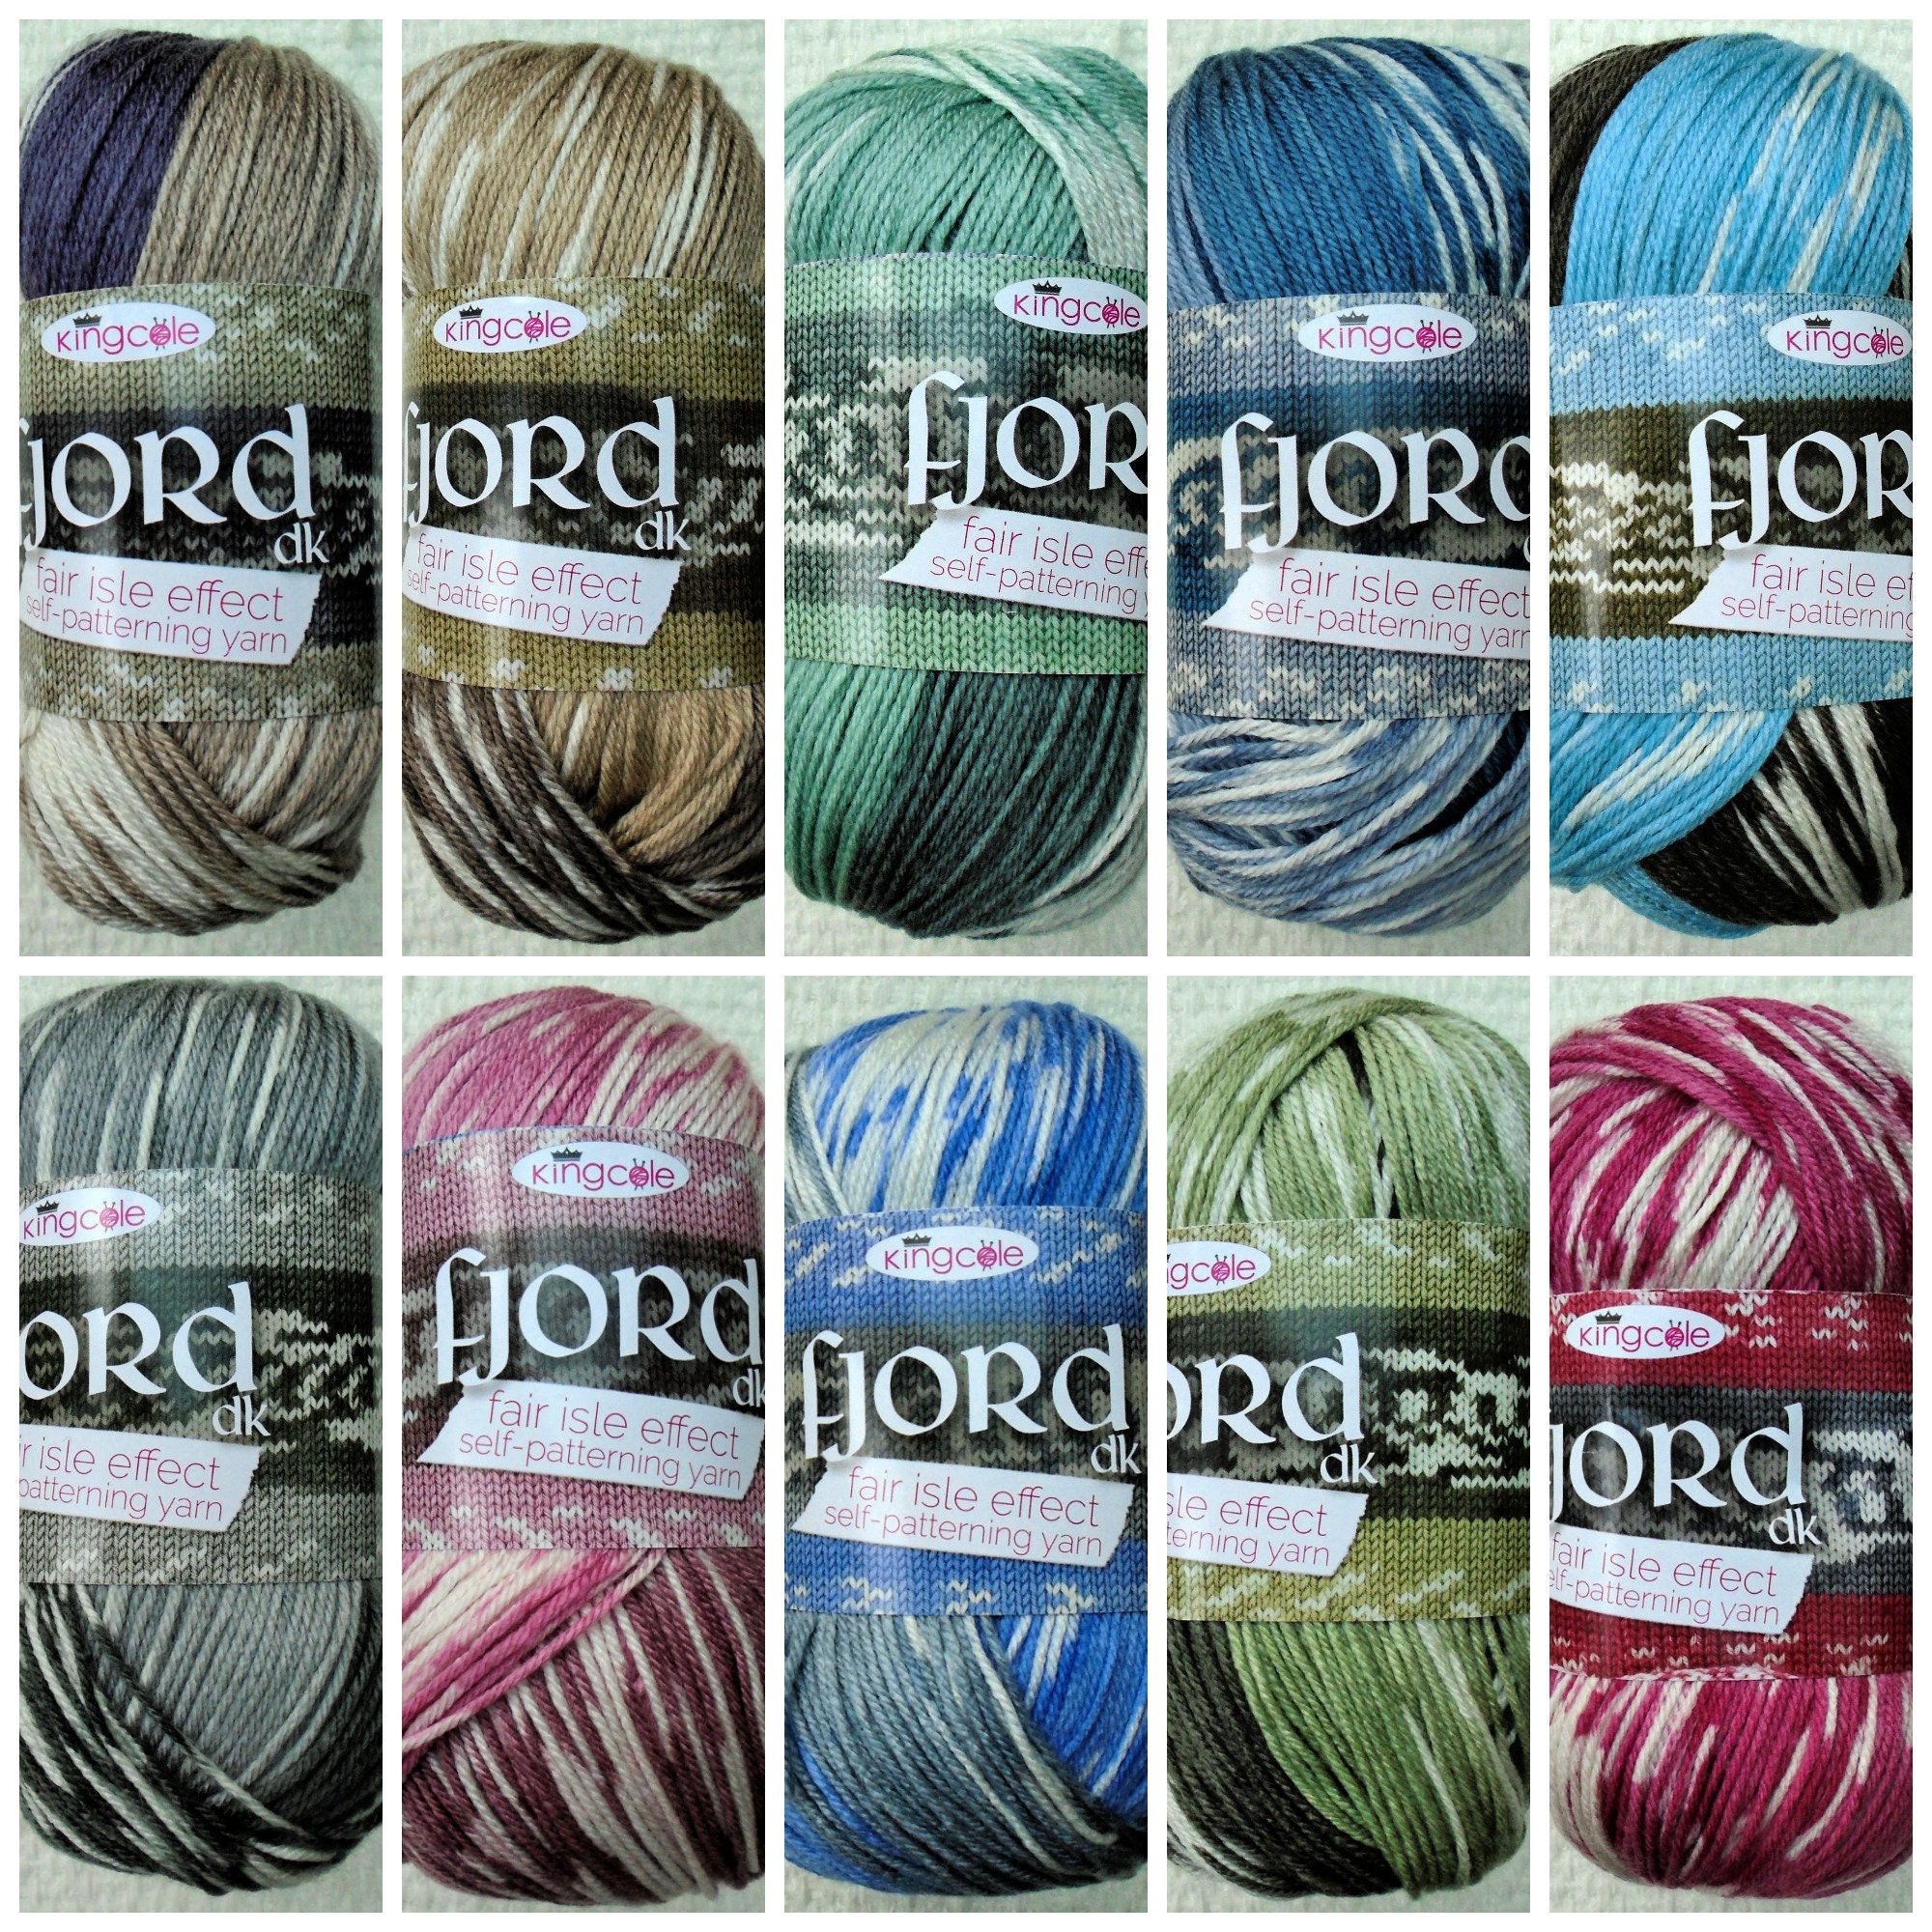 DK Knitting Wool/Yarn King Cole Fjord Easy Fairisle Double | Etsy